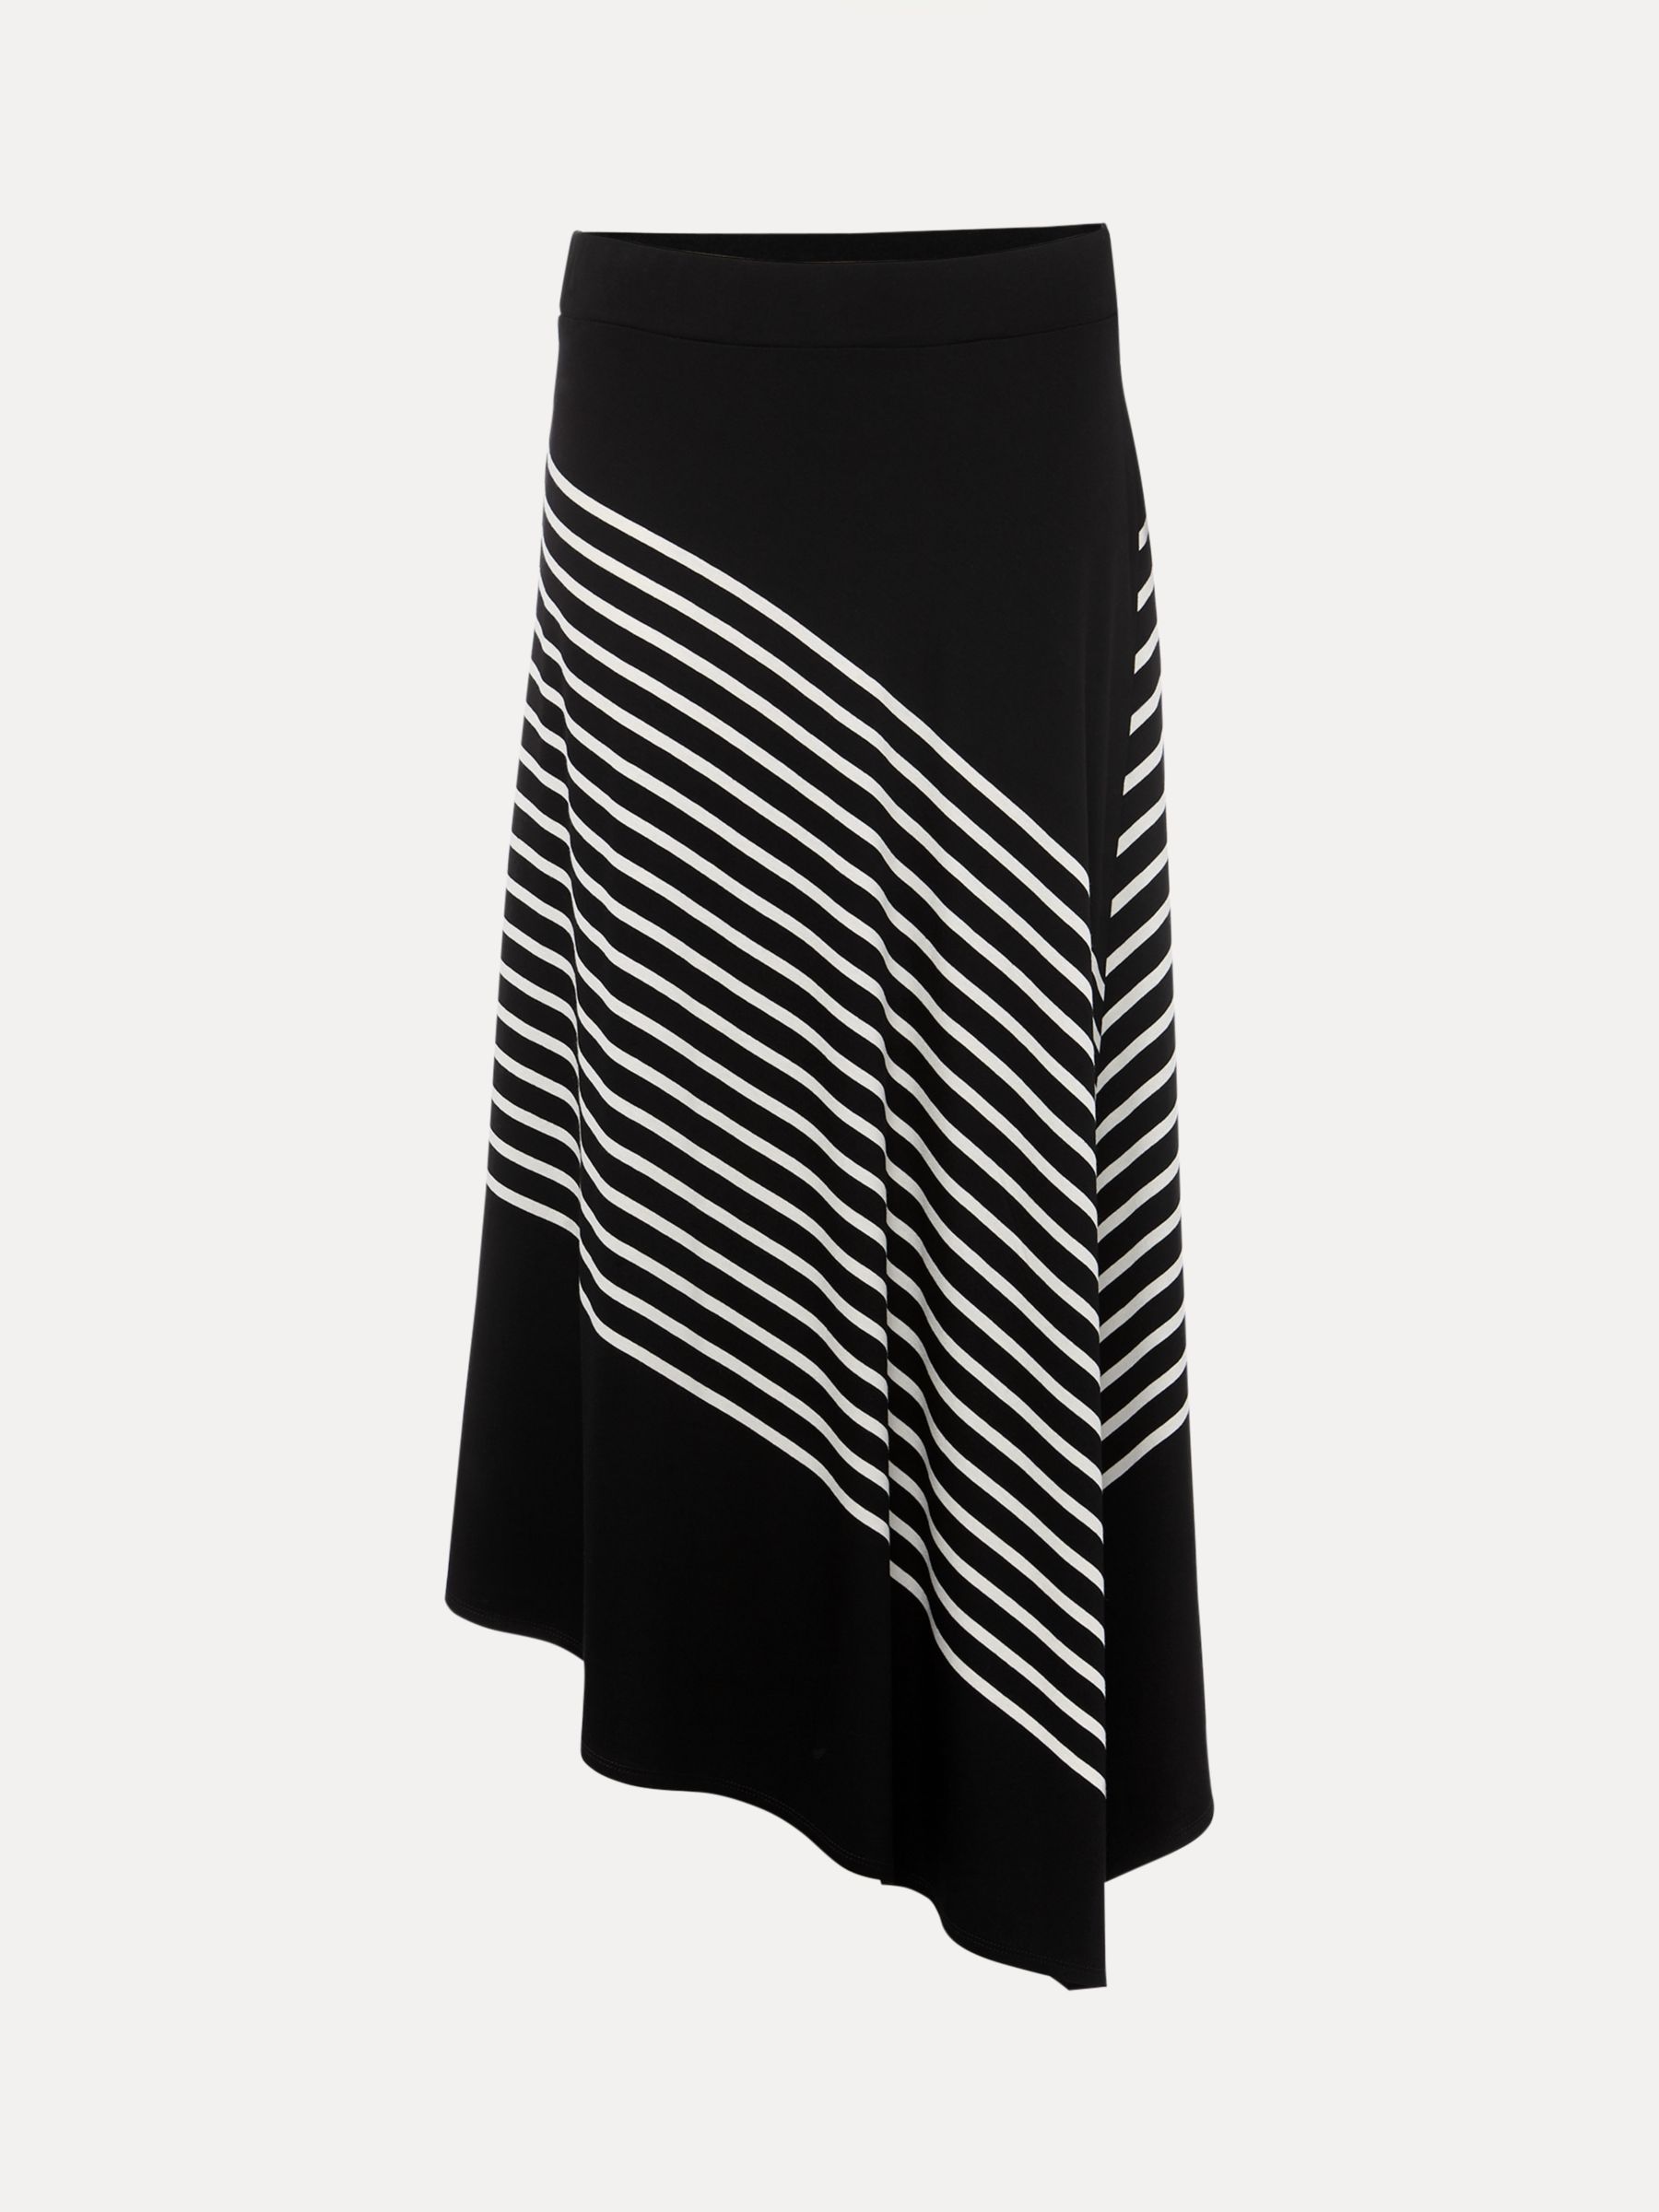 Colour Block A-Line Skirt